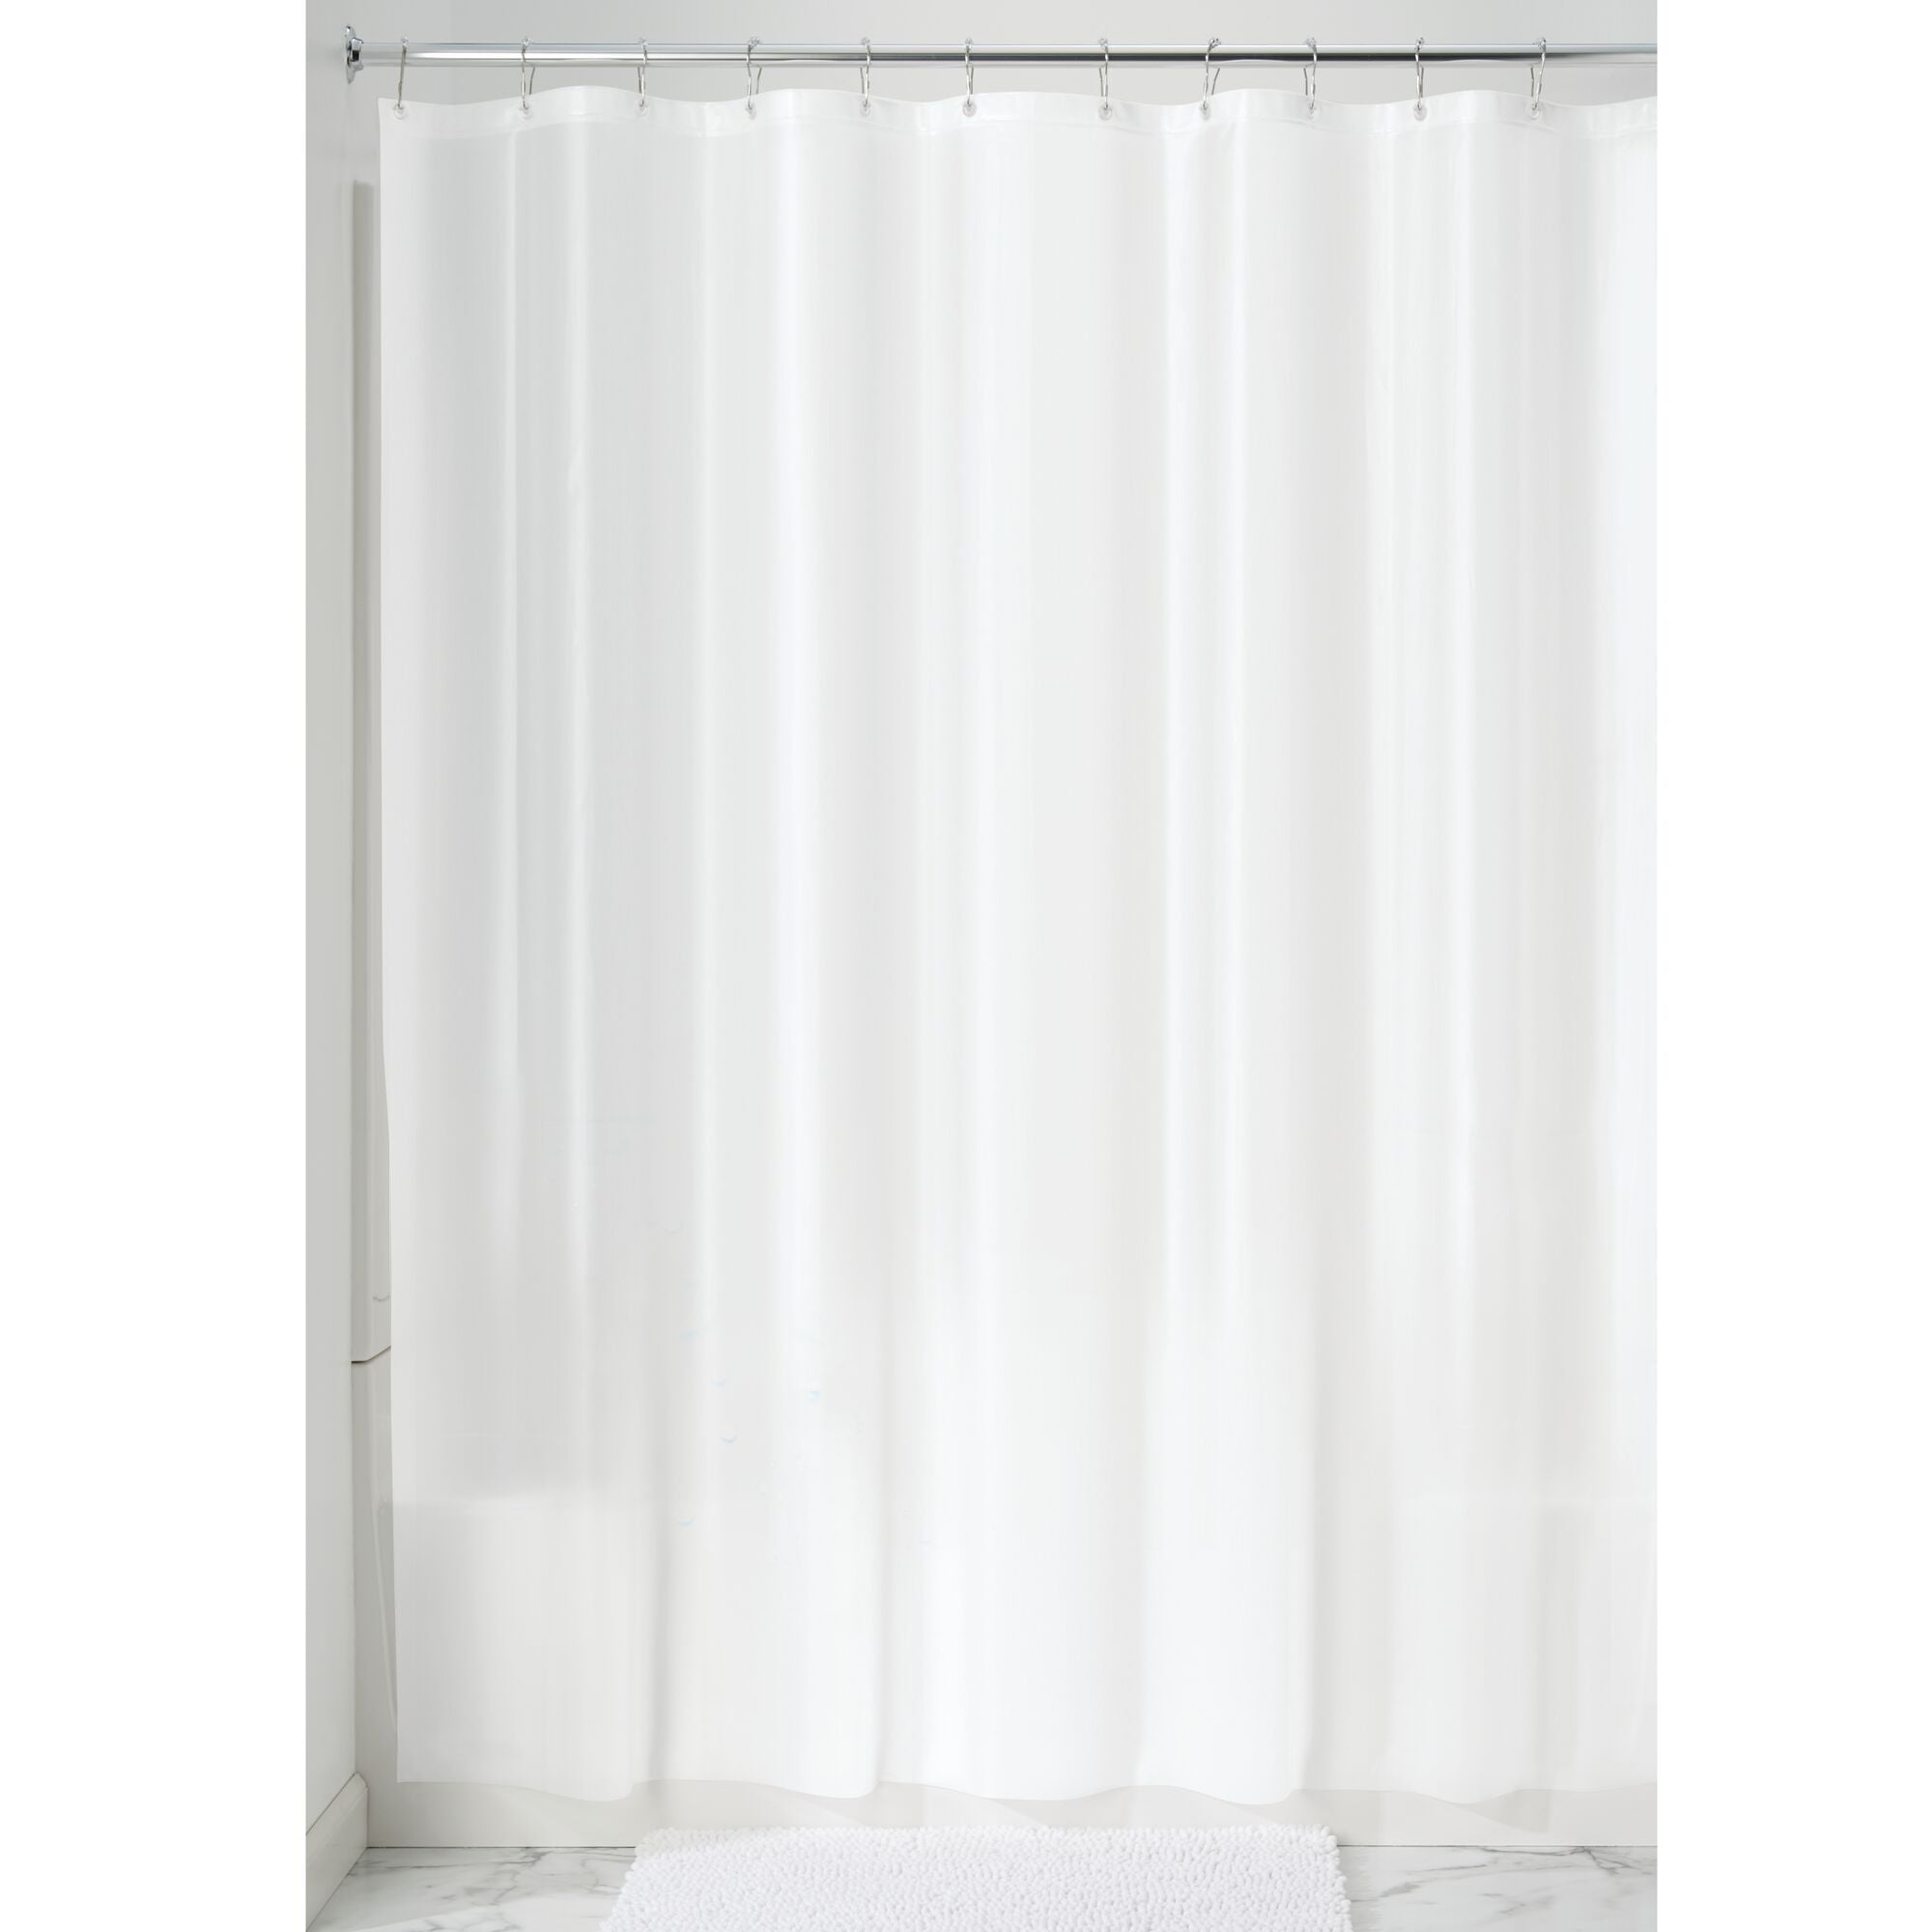 Interdesign Peva 3 Gauge Shower Curtain, Do Polyester Shower Curtains Need A Liner